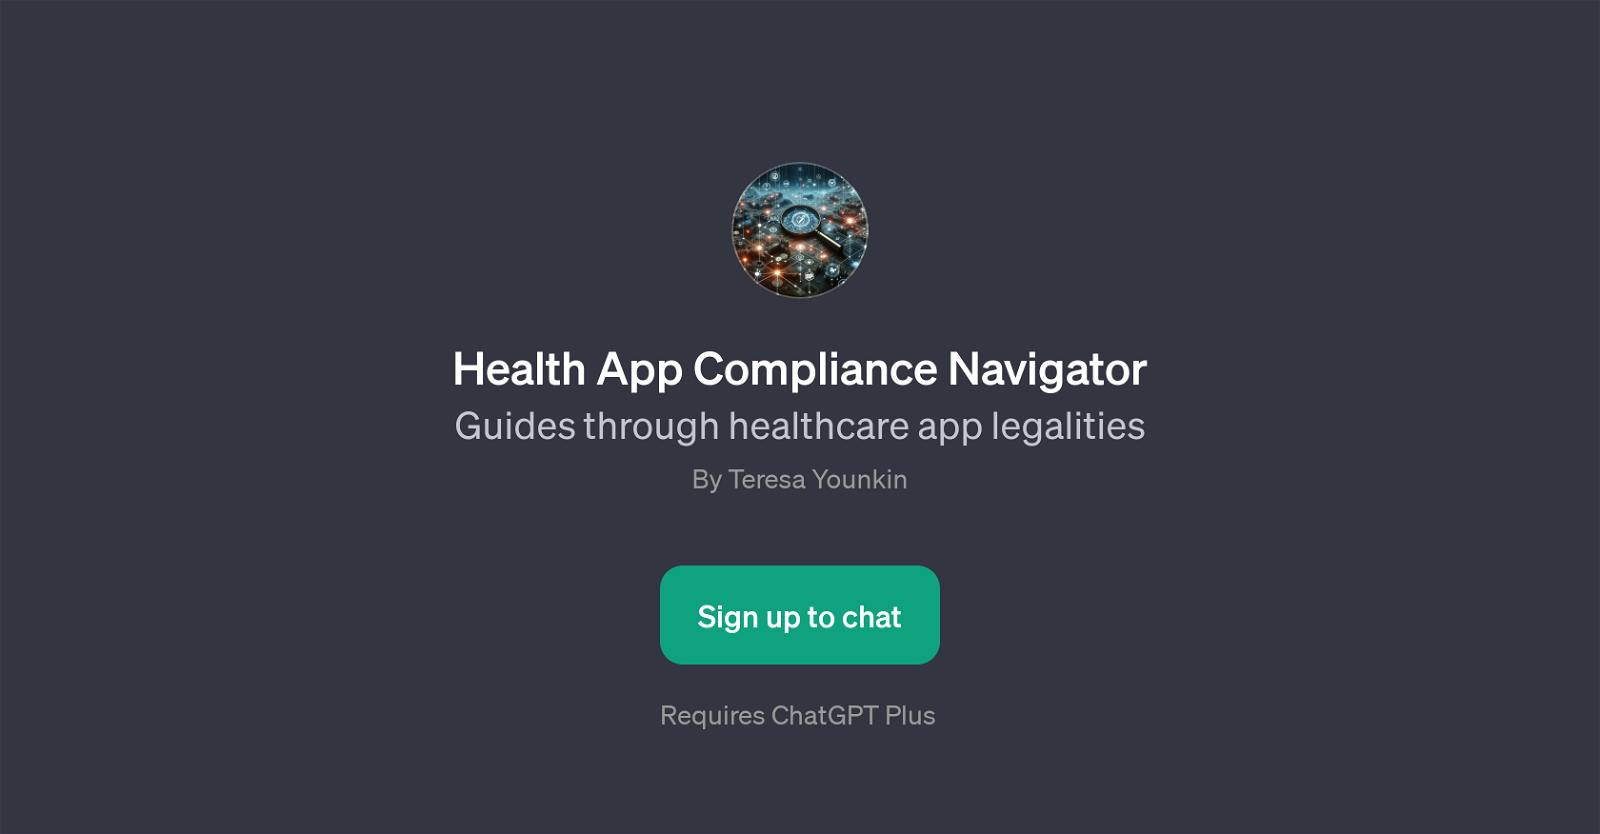 Health App Compliance Navigator website